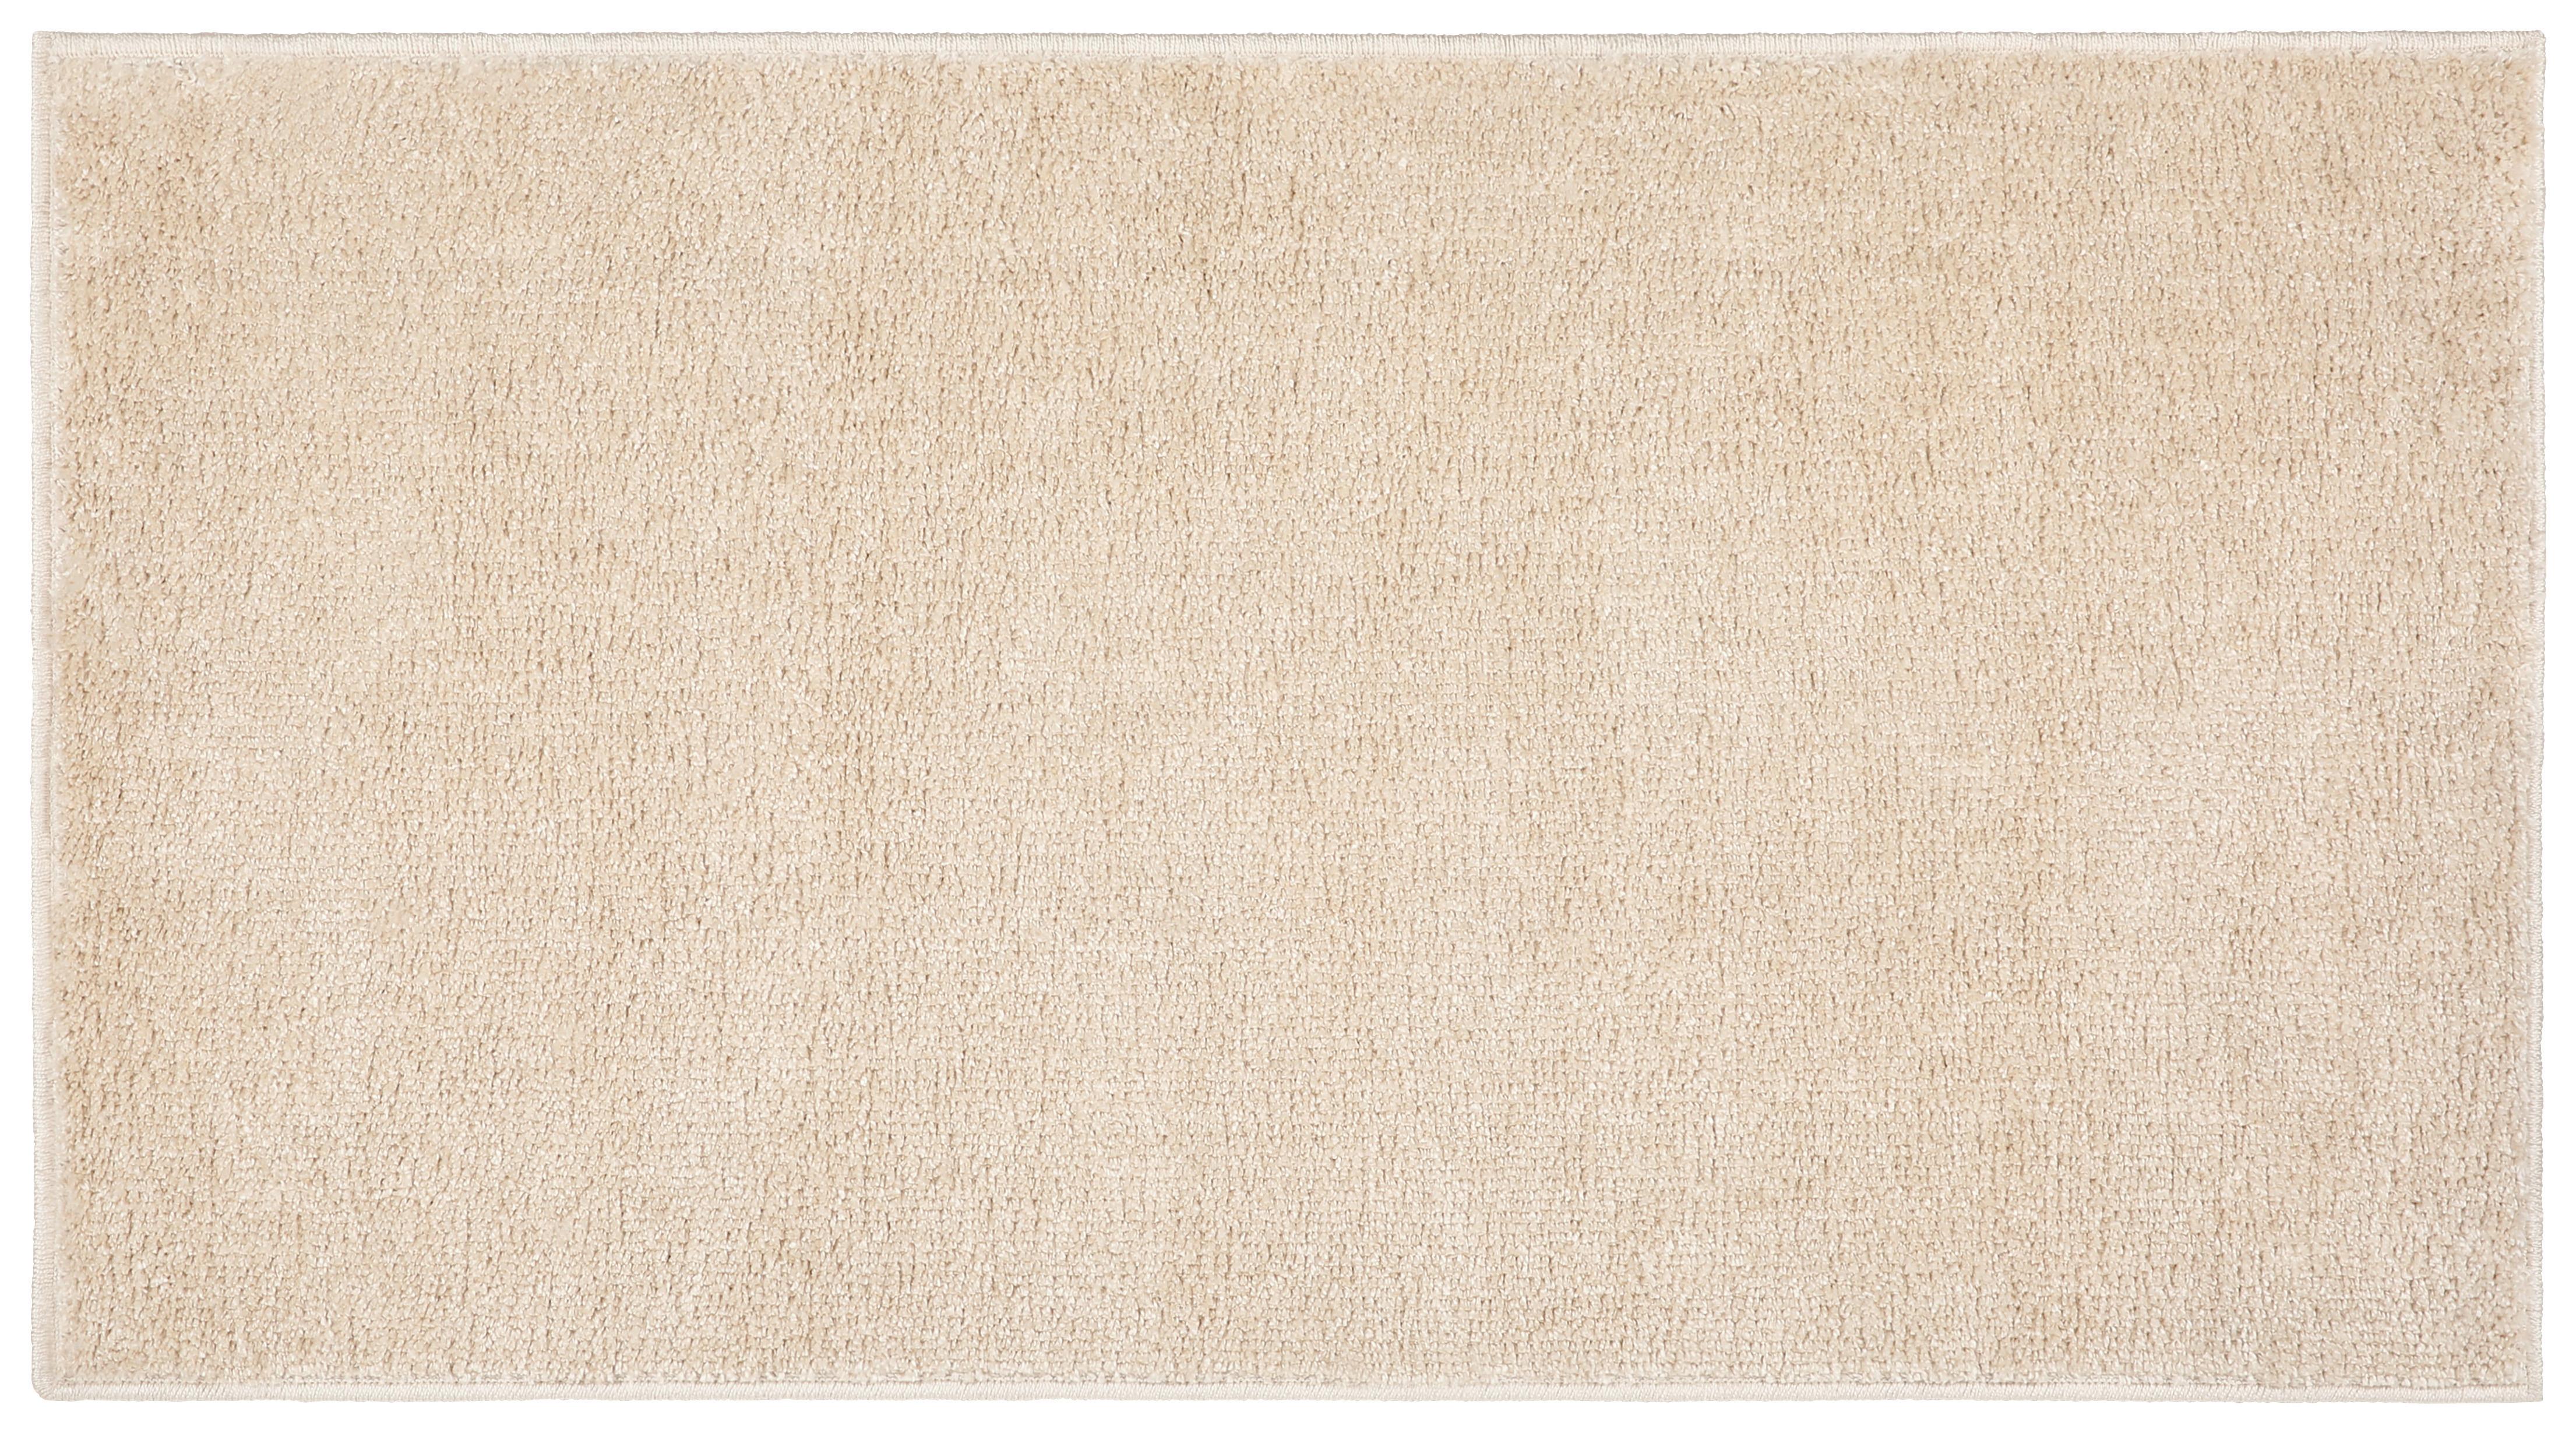 Hochflor Teppich Beige Bono 120x170 cm - Beige, Basics, Textil (120/170cm) - Luca Bessoni